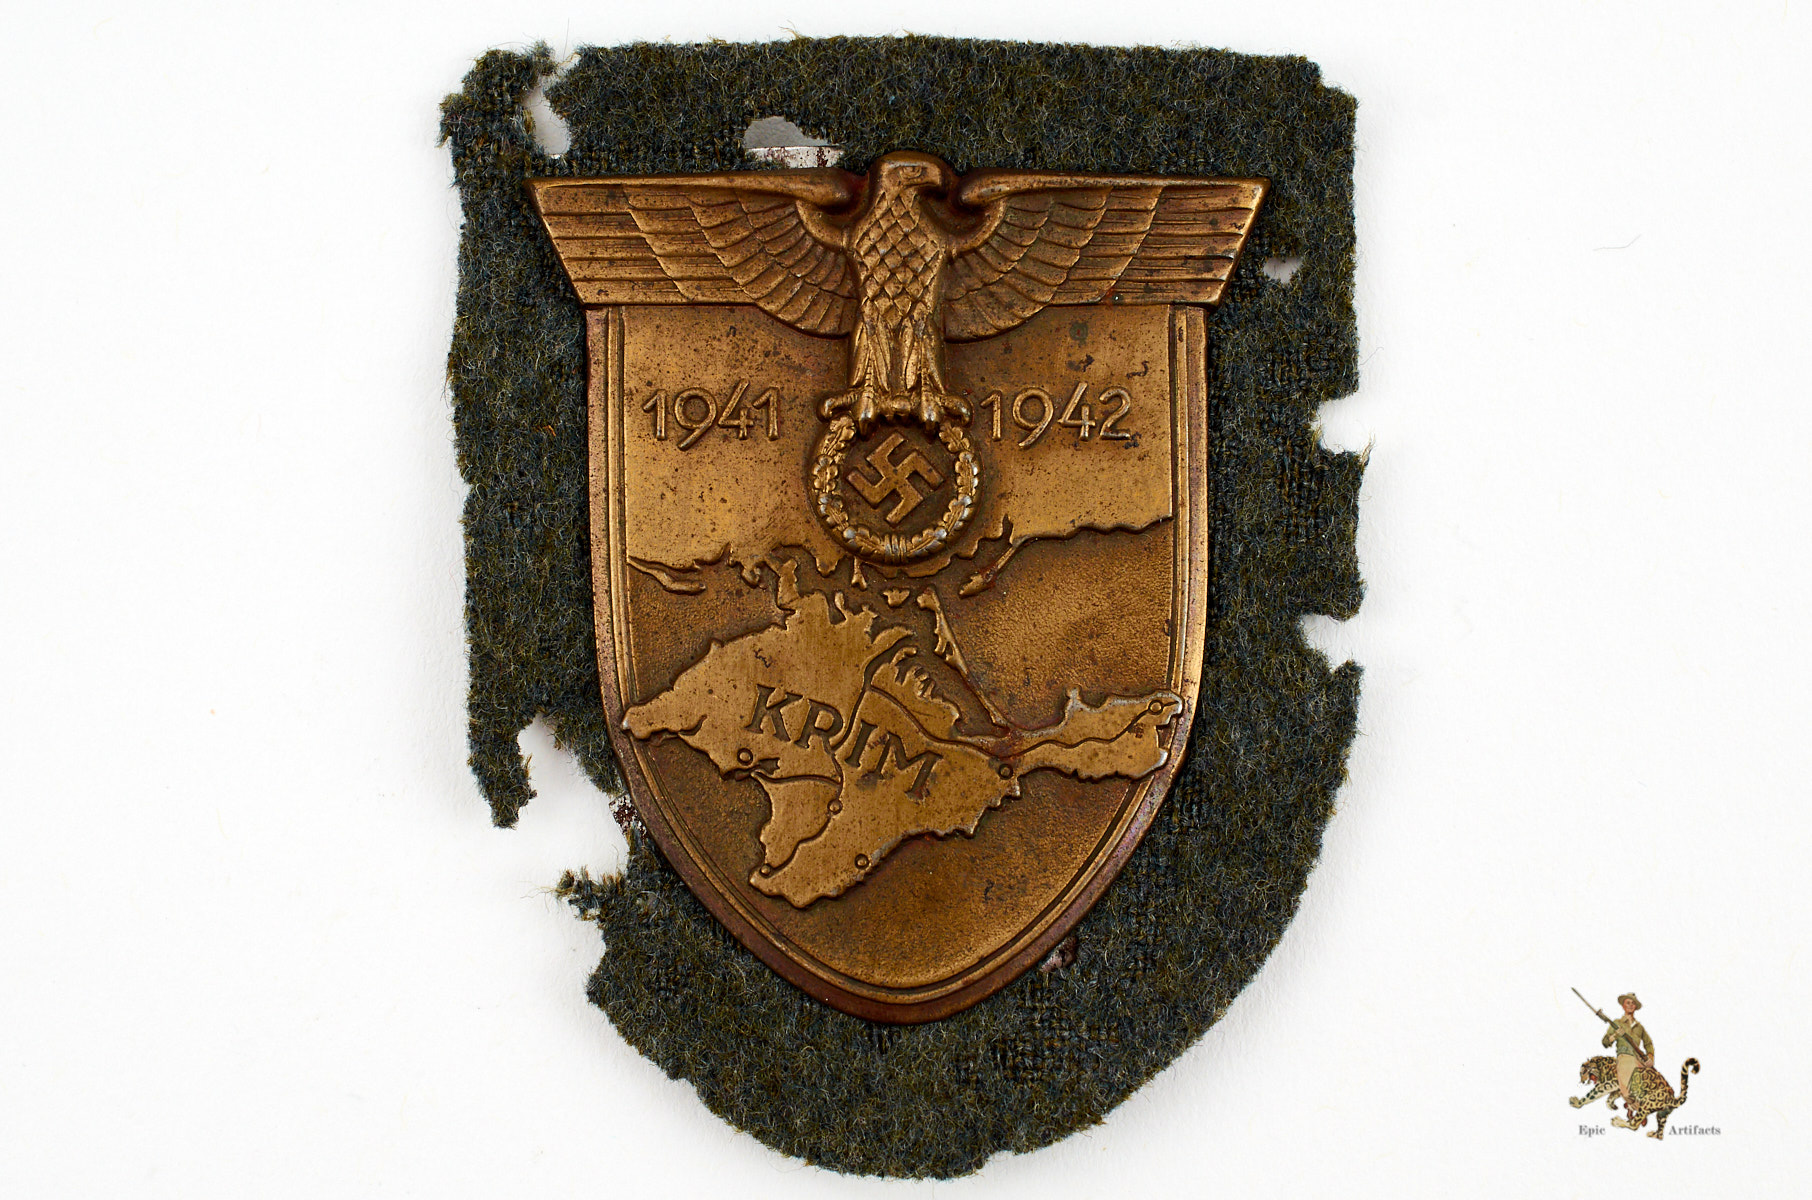 Krim Campaign Shield - Epic Artifacts - German World War 2